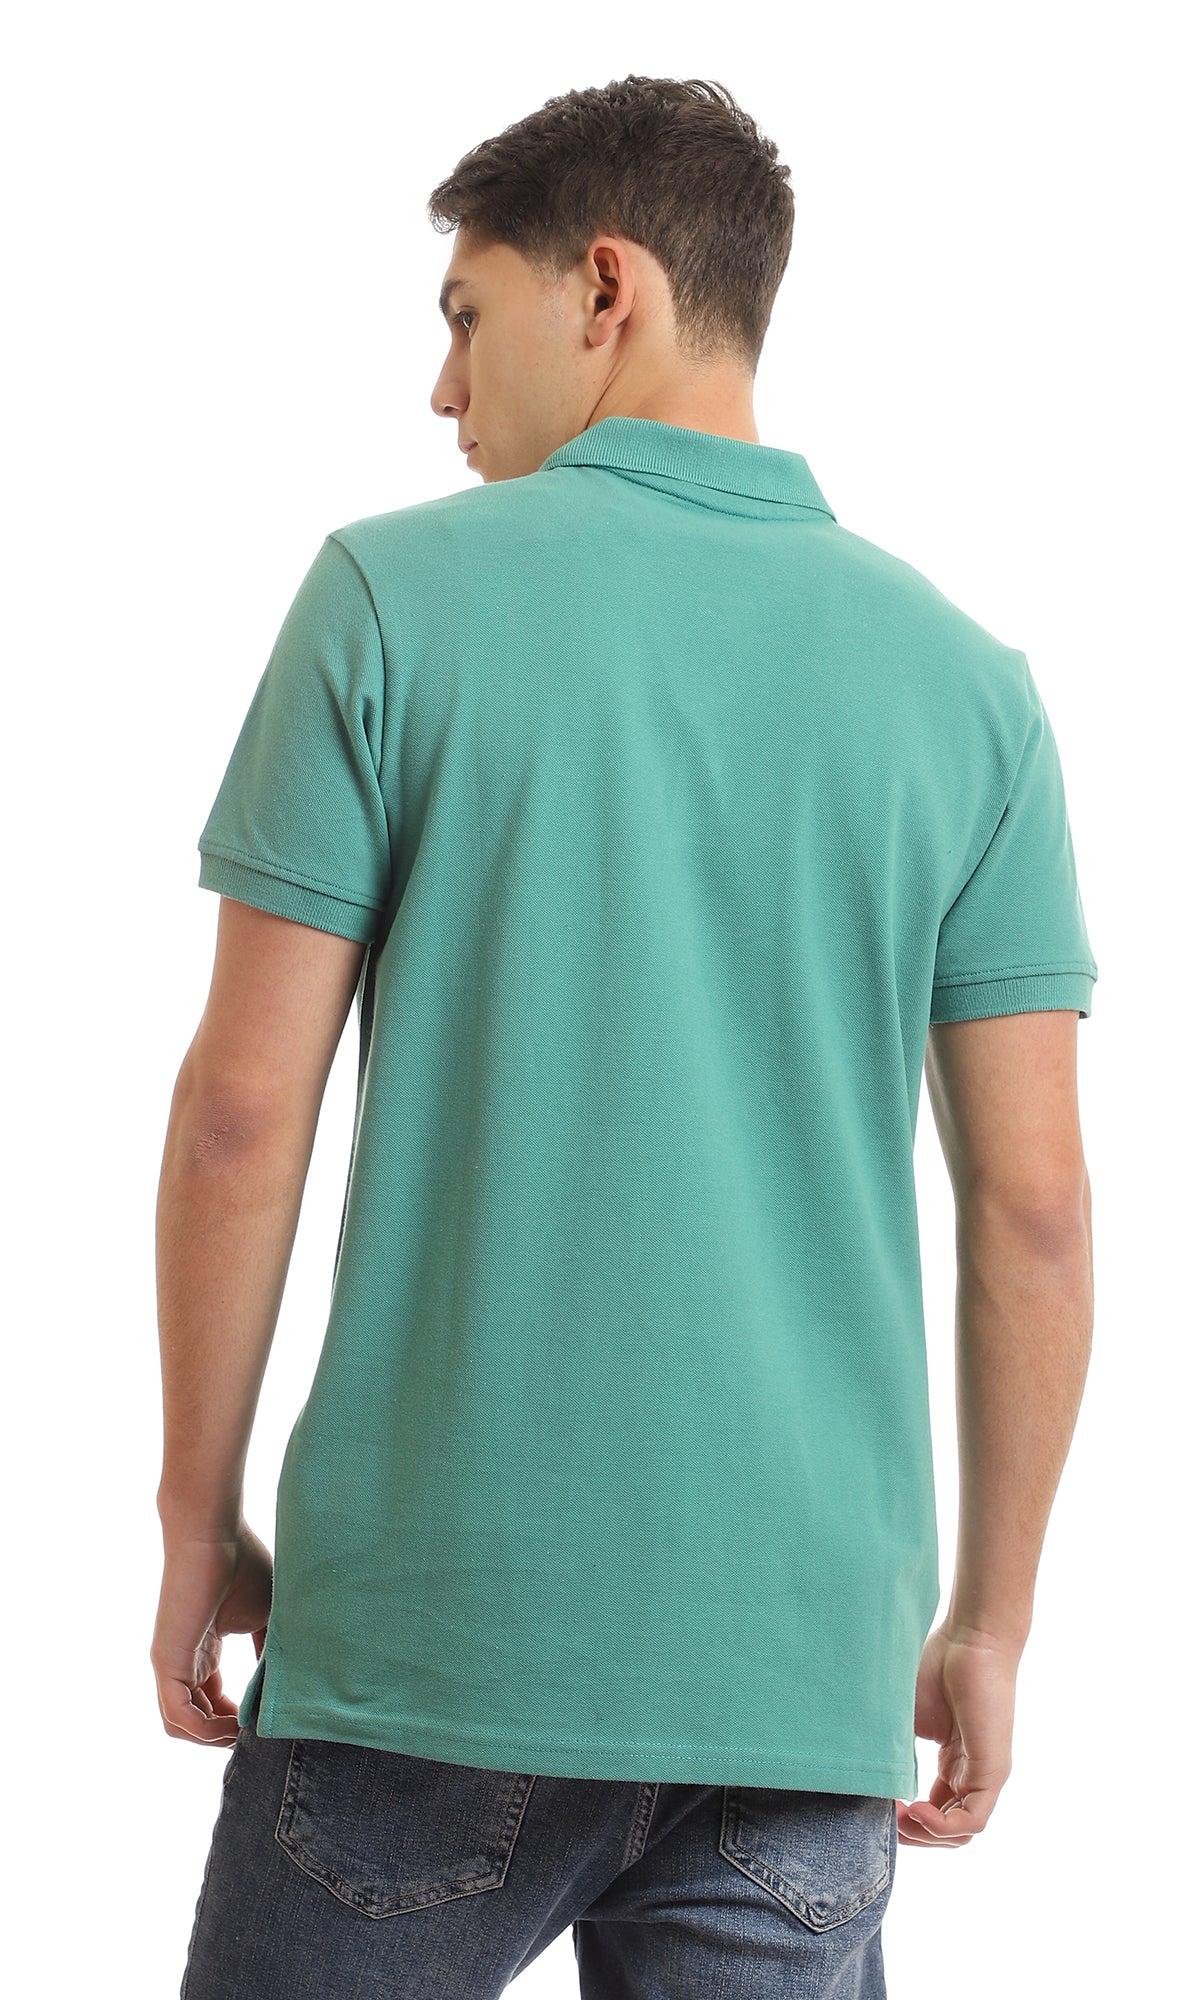 97899 Upper Buttoned Cotton Pique Polo Shirt - Dark Aquamarine Green